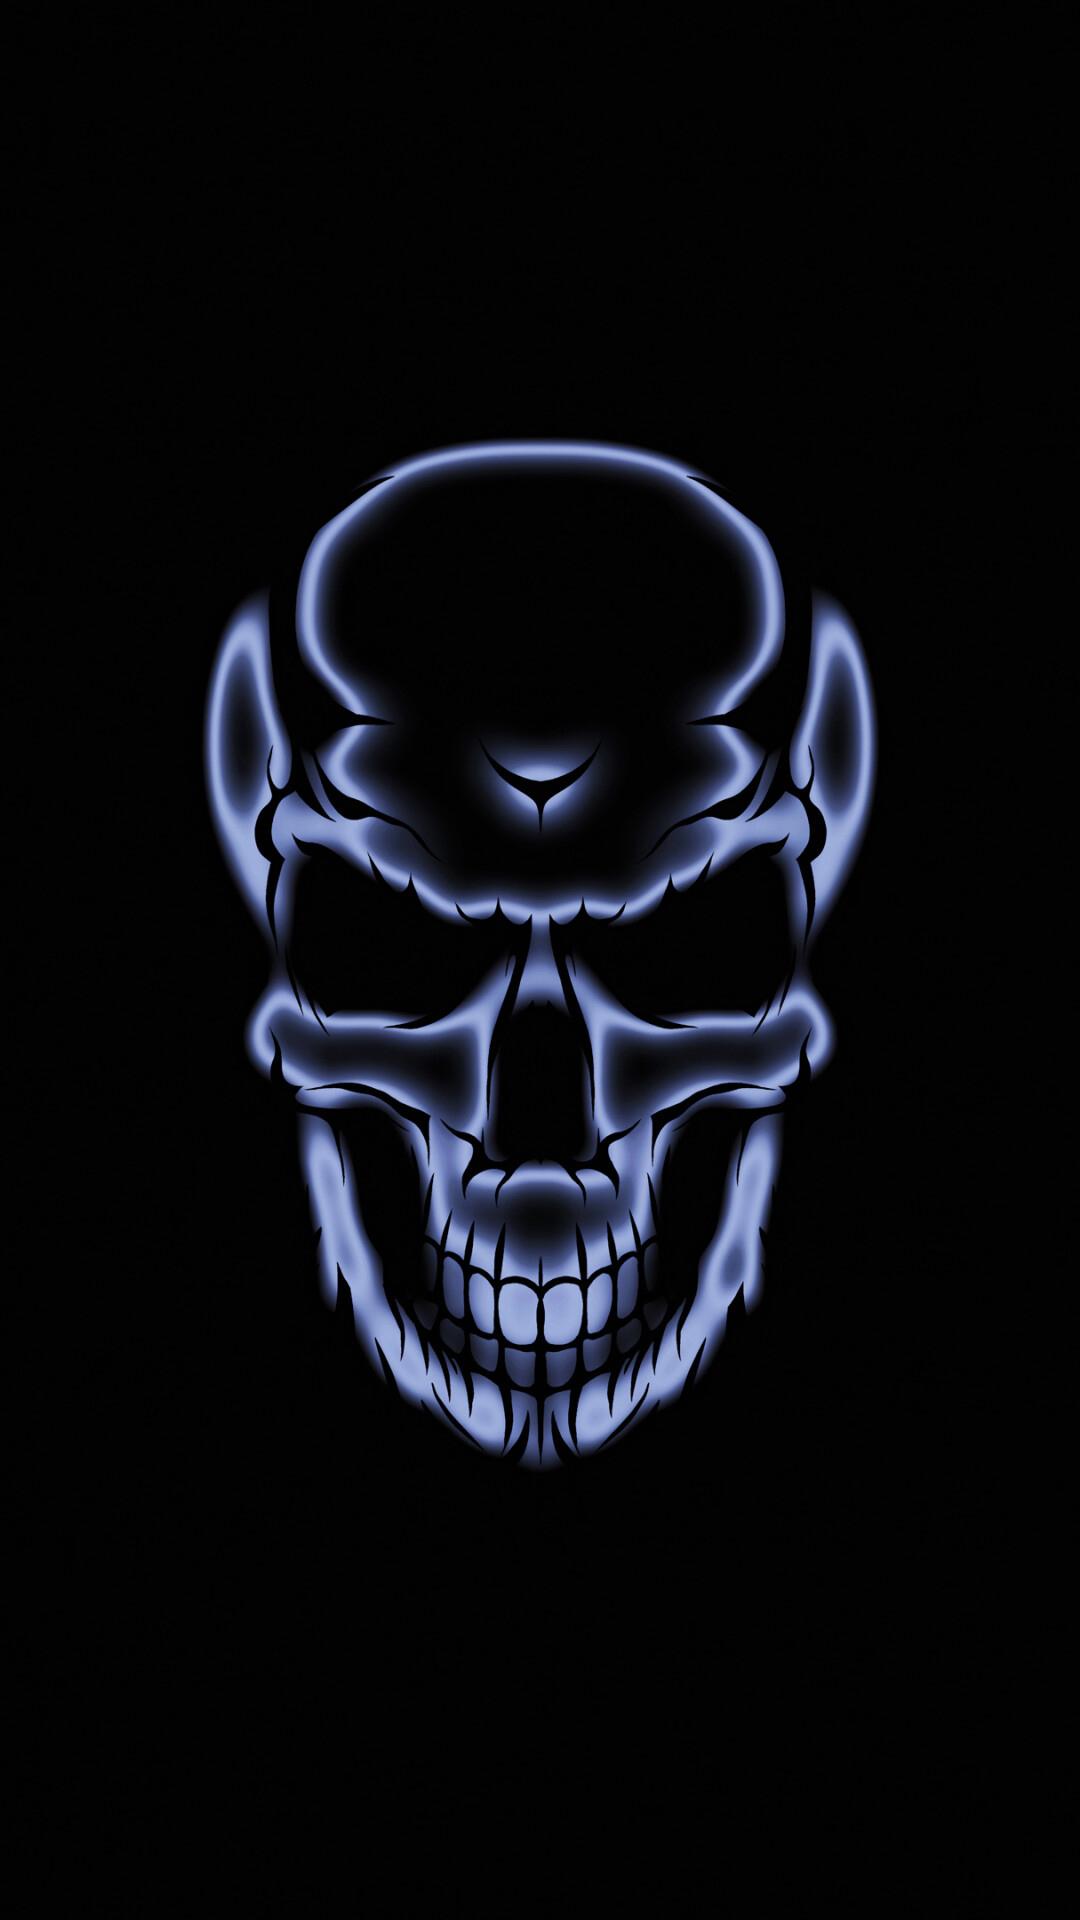 Glow in the Dark: Glowing skull, Monochrome, Minimalist. 1080x1920 Full HD Background.